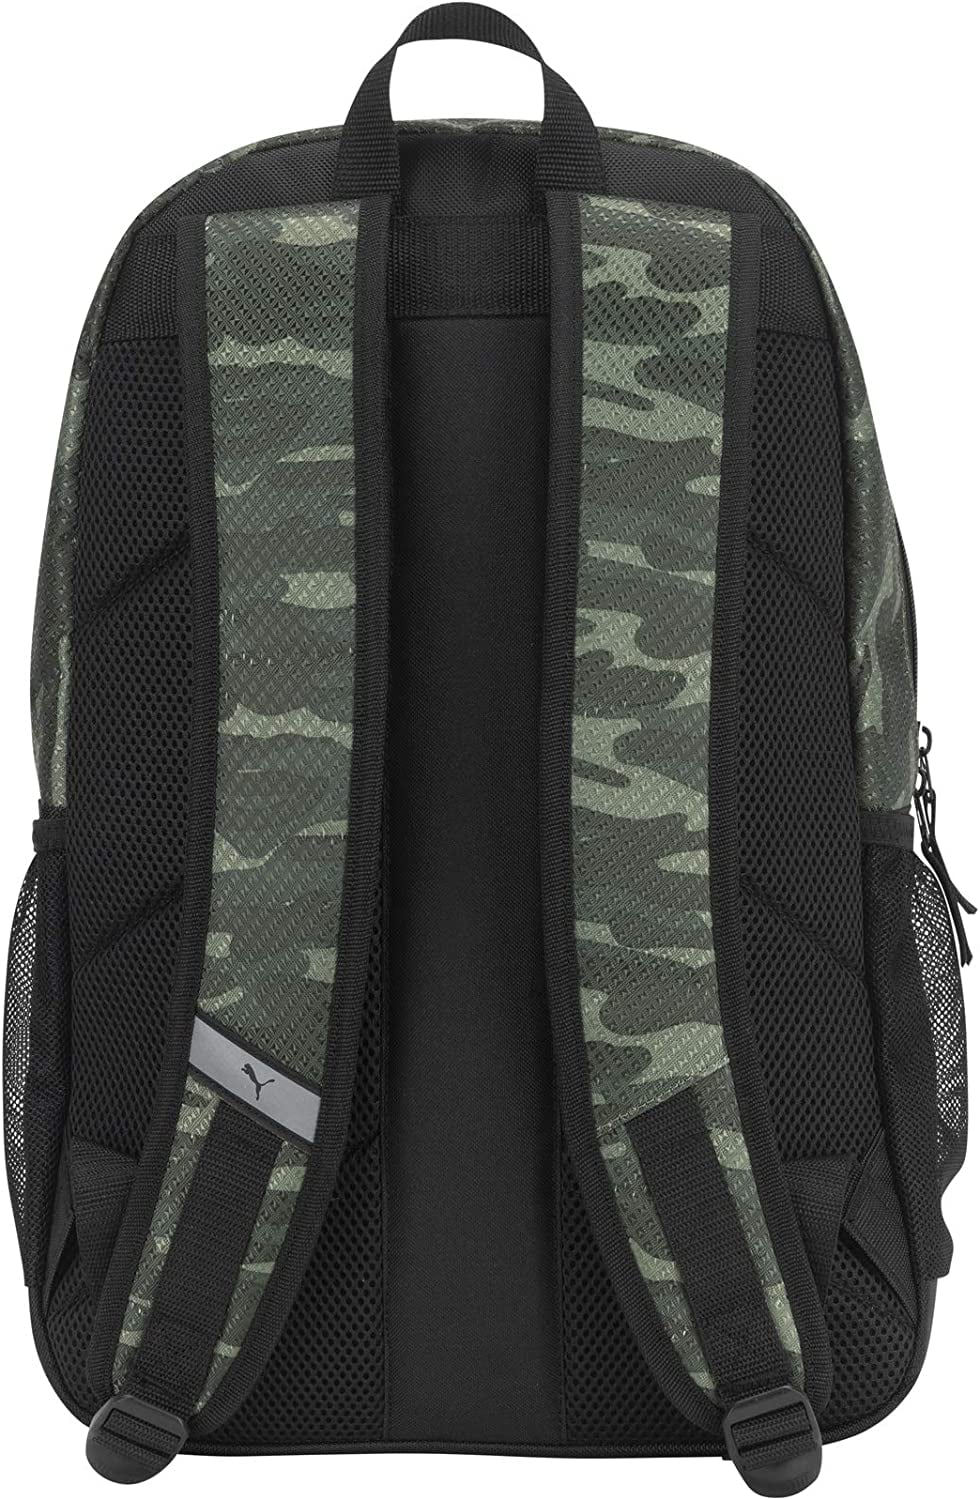 Puma Evercat Contender Backpack, Black/Gold Walmart.com